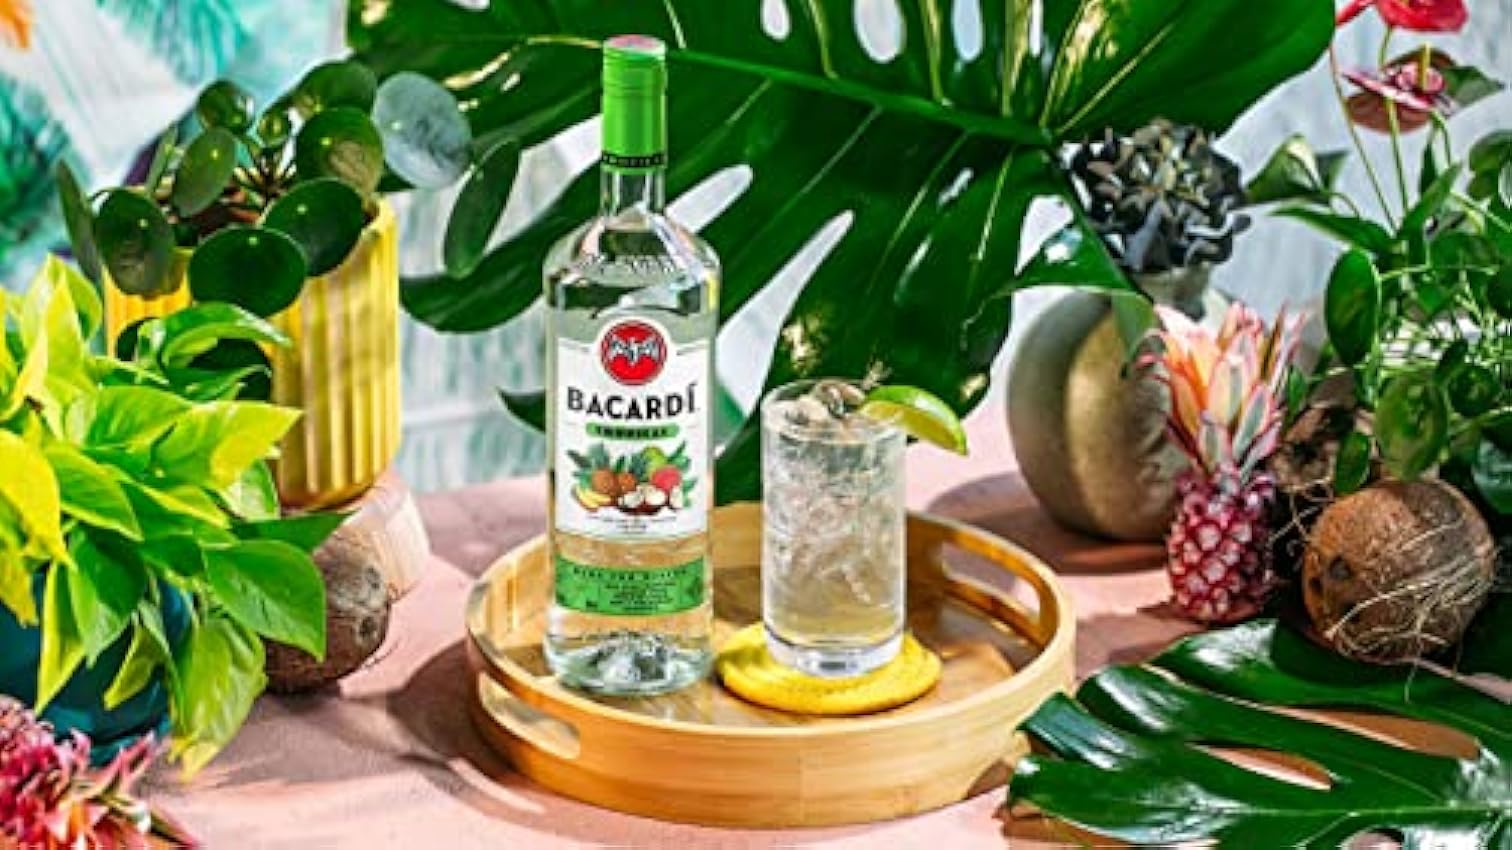 Bacardi Tropical Flavoured Rum 0,7L (32% Vol.) - Limited Edition lHXG0M4o